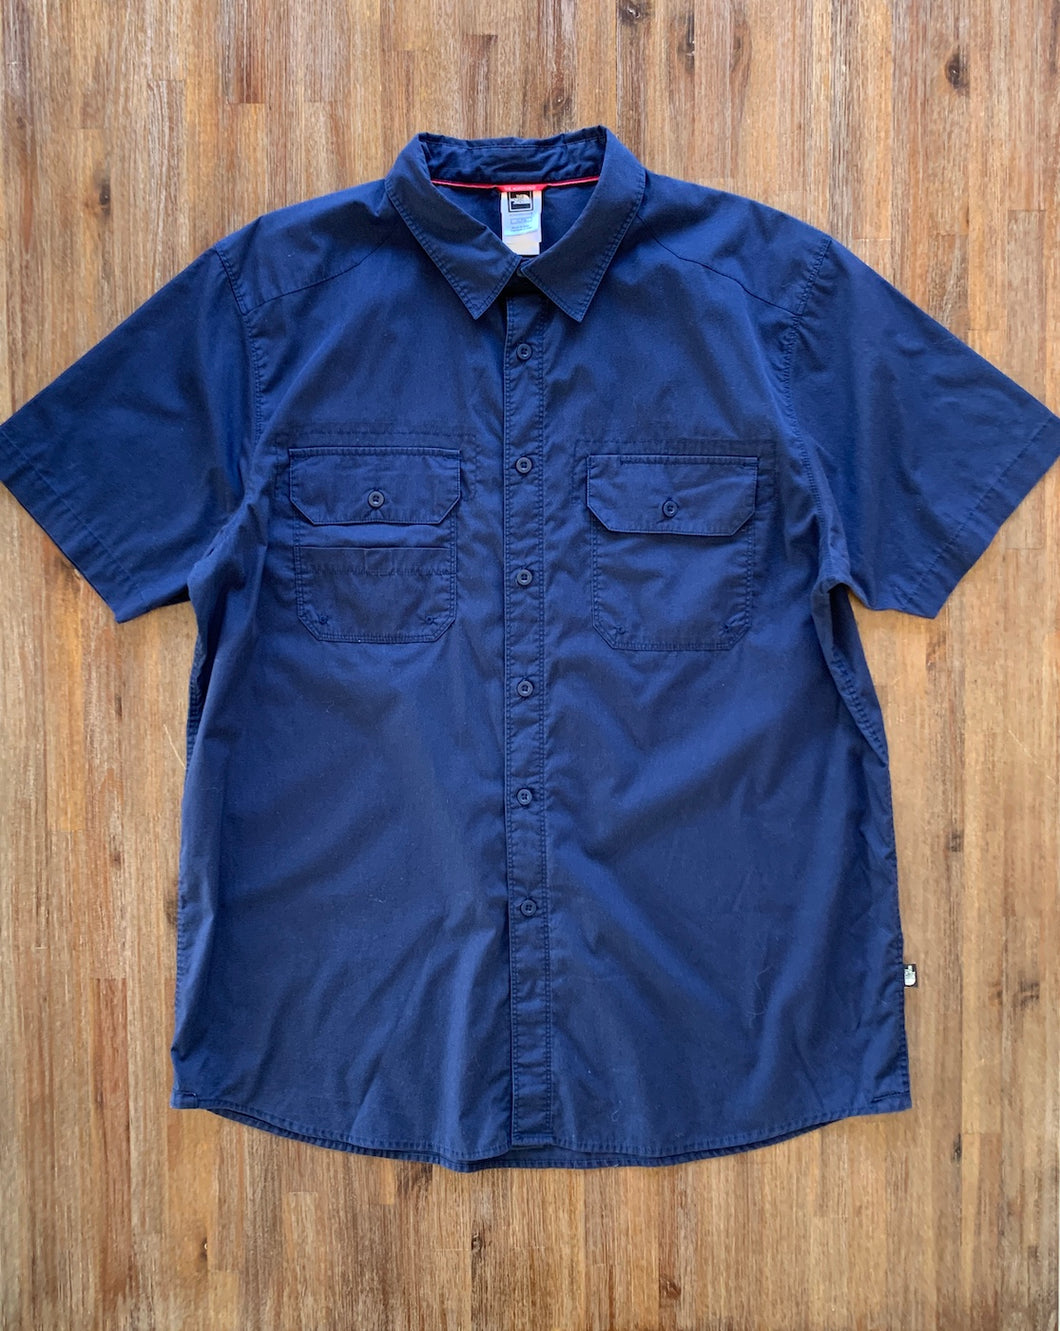 NORTH FACE Size L Dark Blue Short Sleeve Button Shirt Men's  JUL55